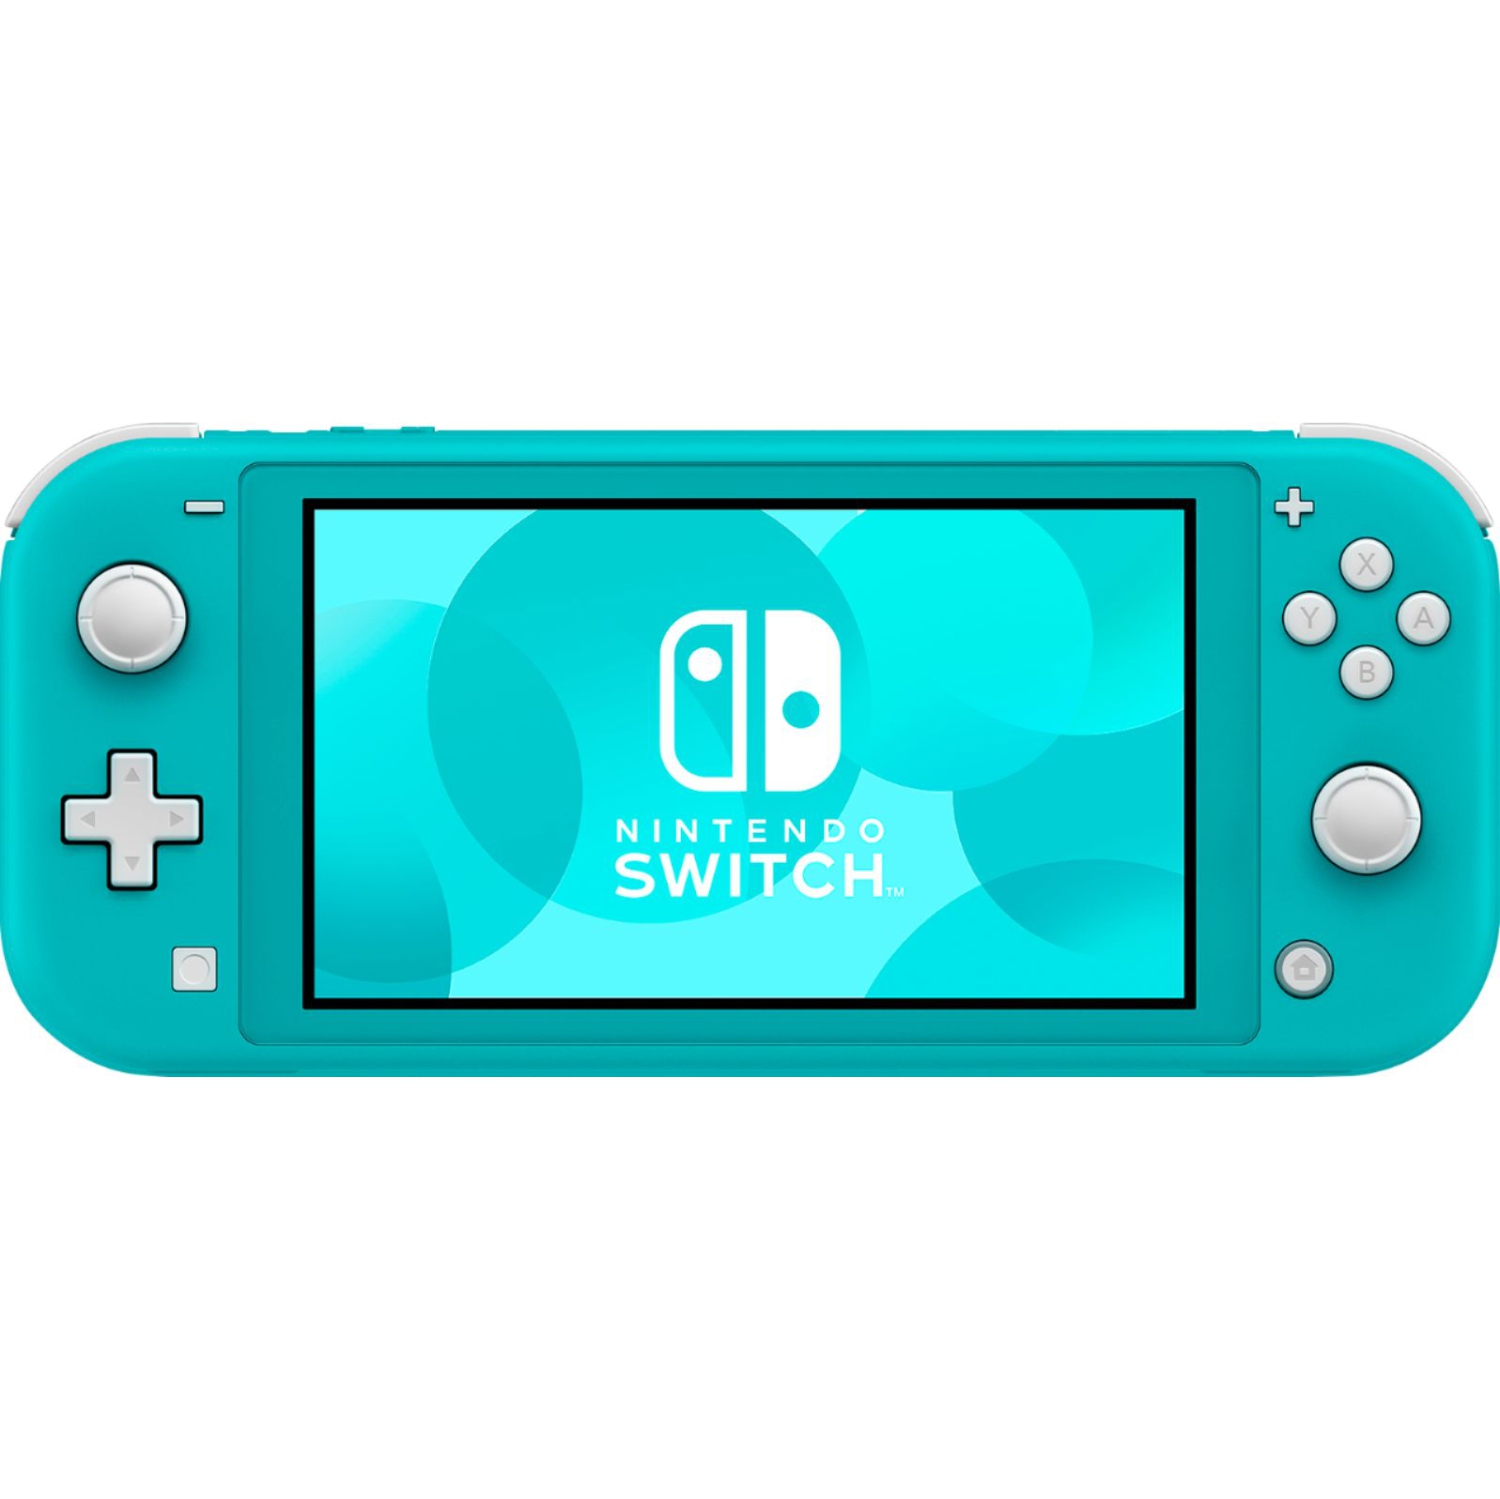 Open Box - Nintendo Switch Lite - Turquoise